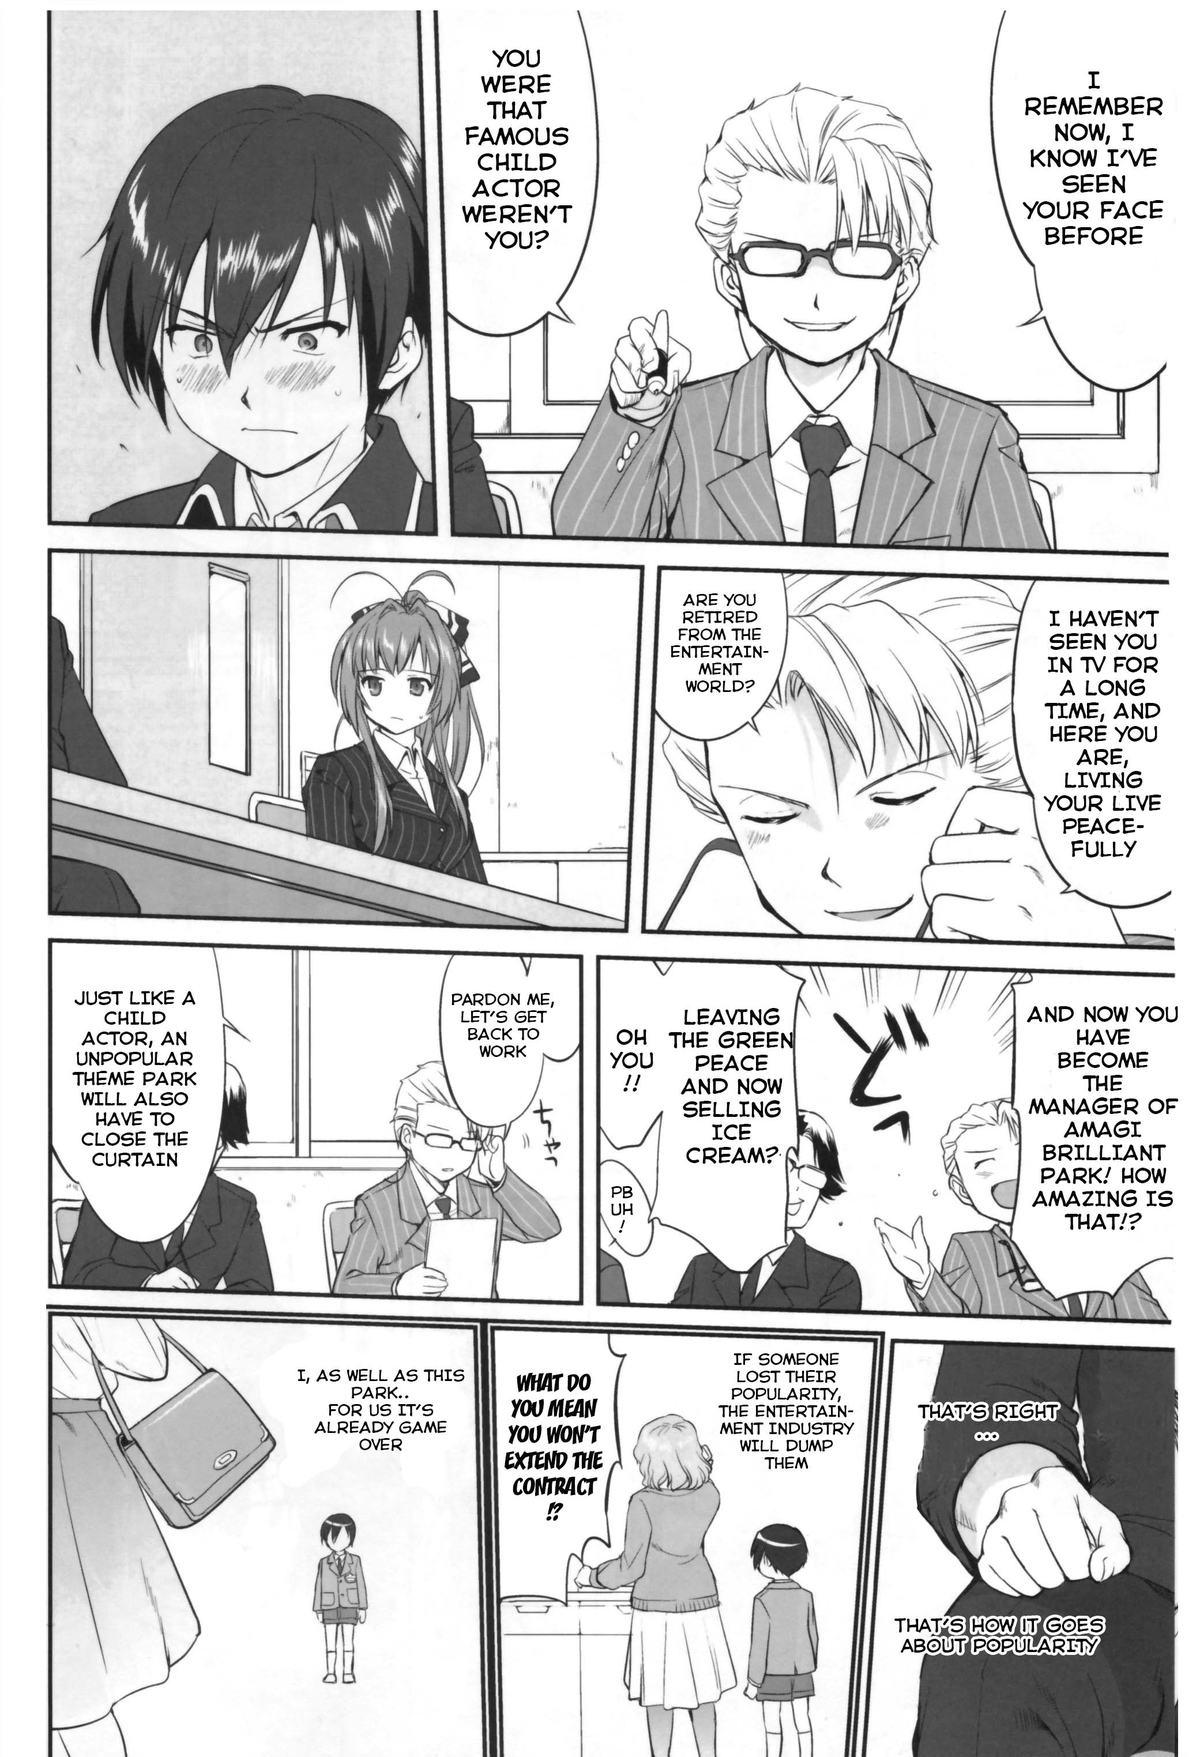 Boy Amagi Strip Gekijou - Amagi brilliant park Casting - Page 9